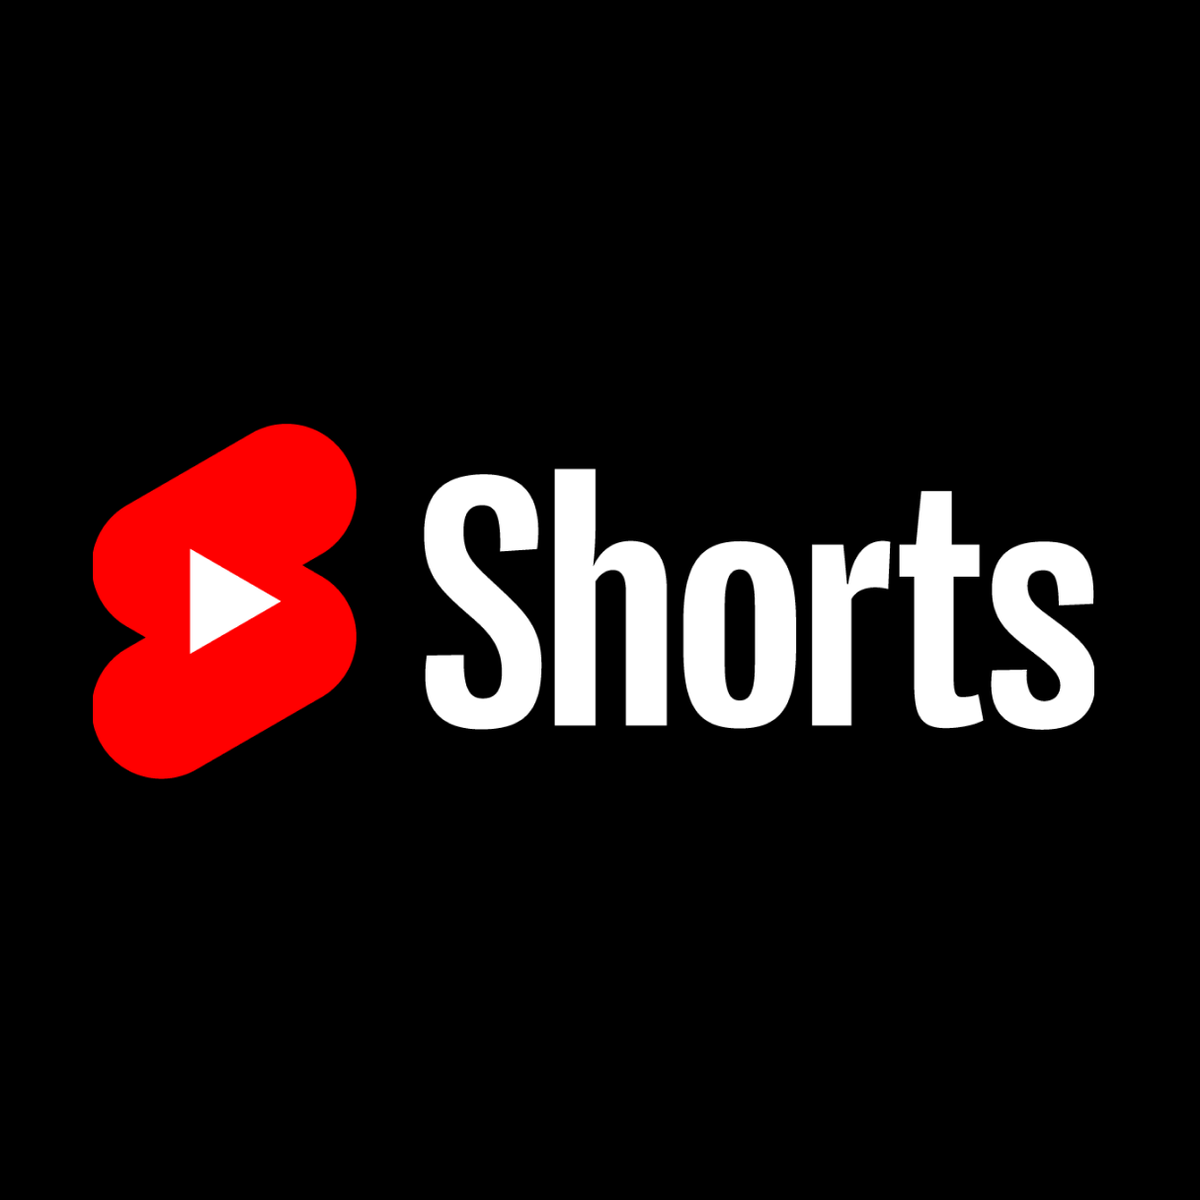 Ютуб Шортс. Youtube shorts logo. Надпись shorted